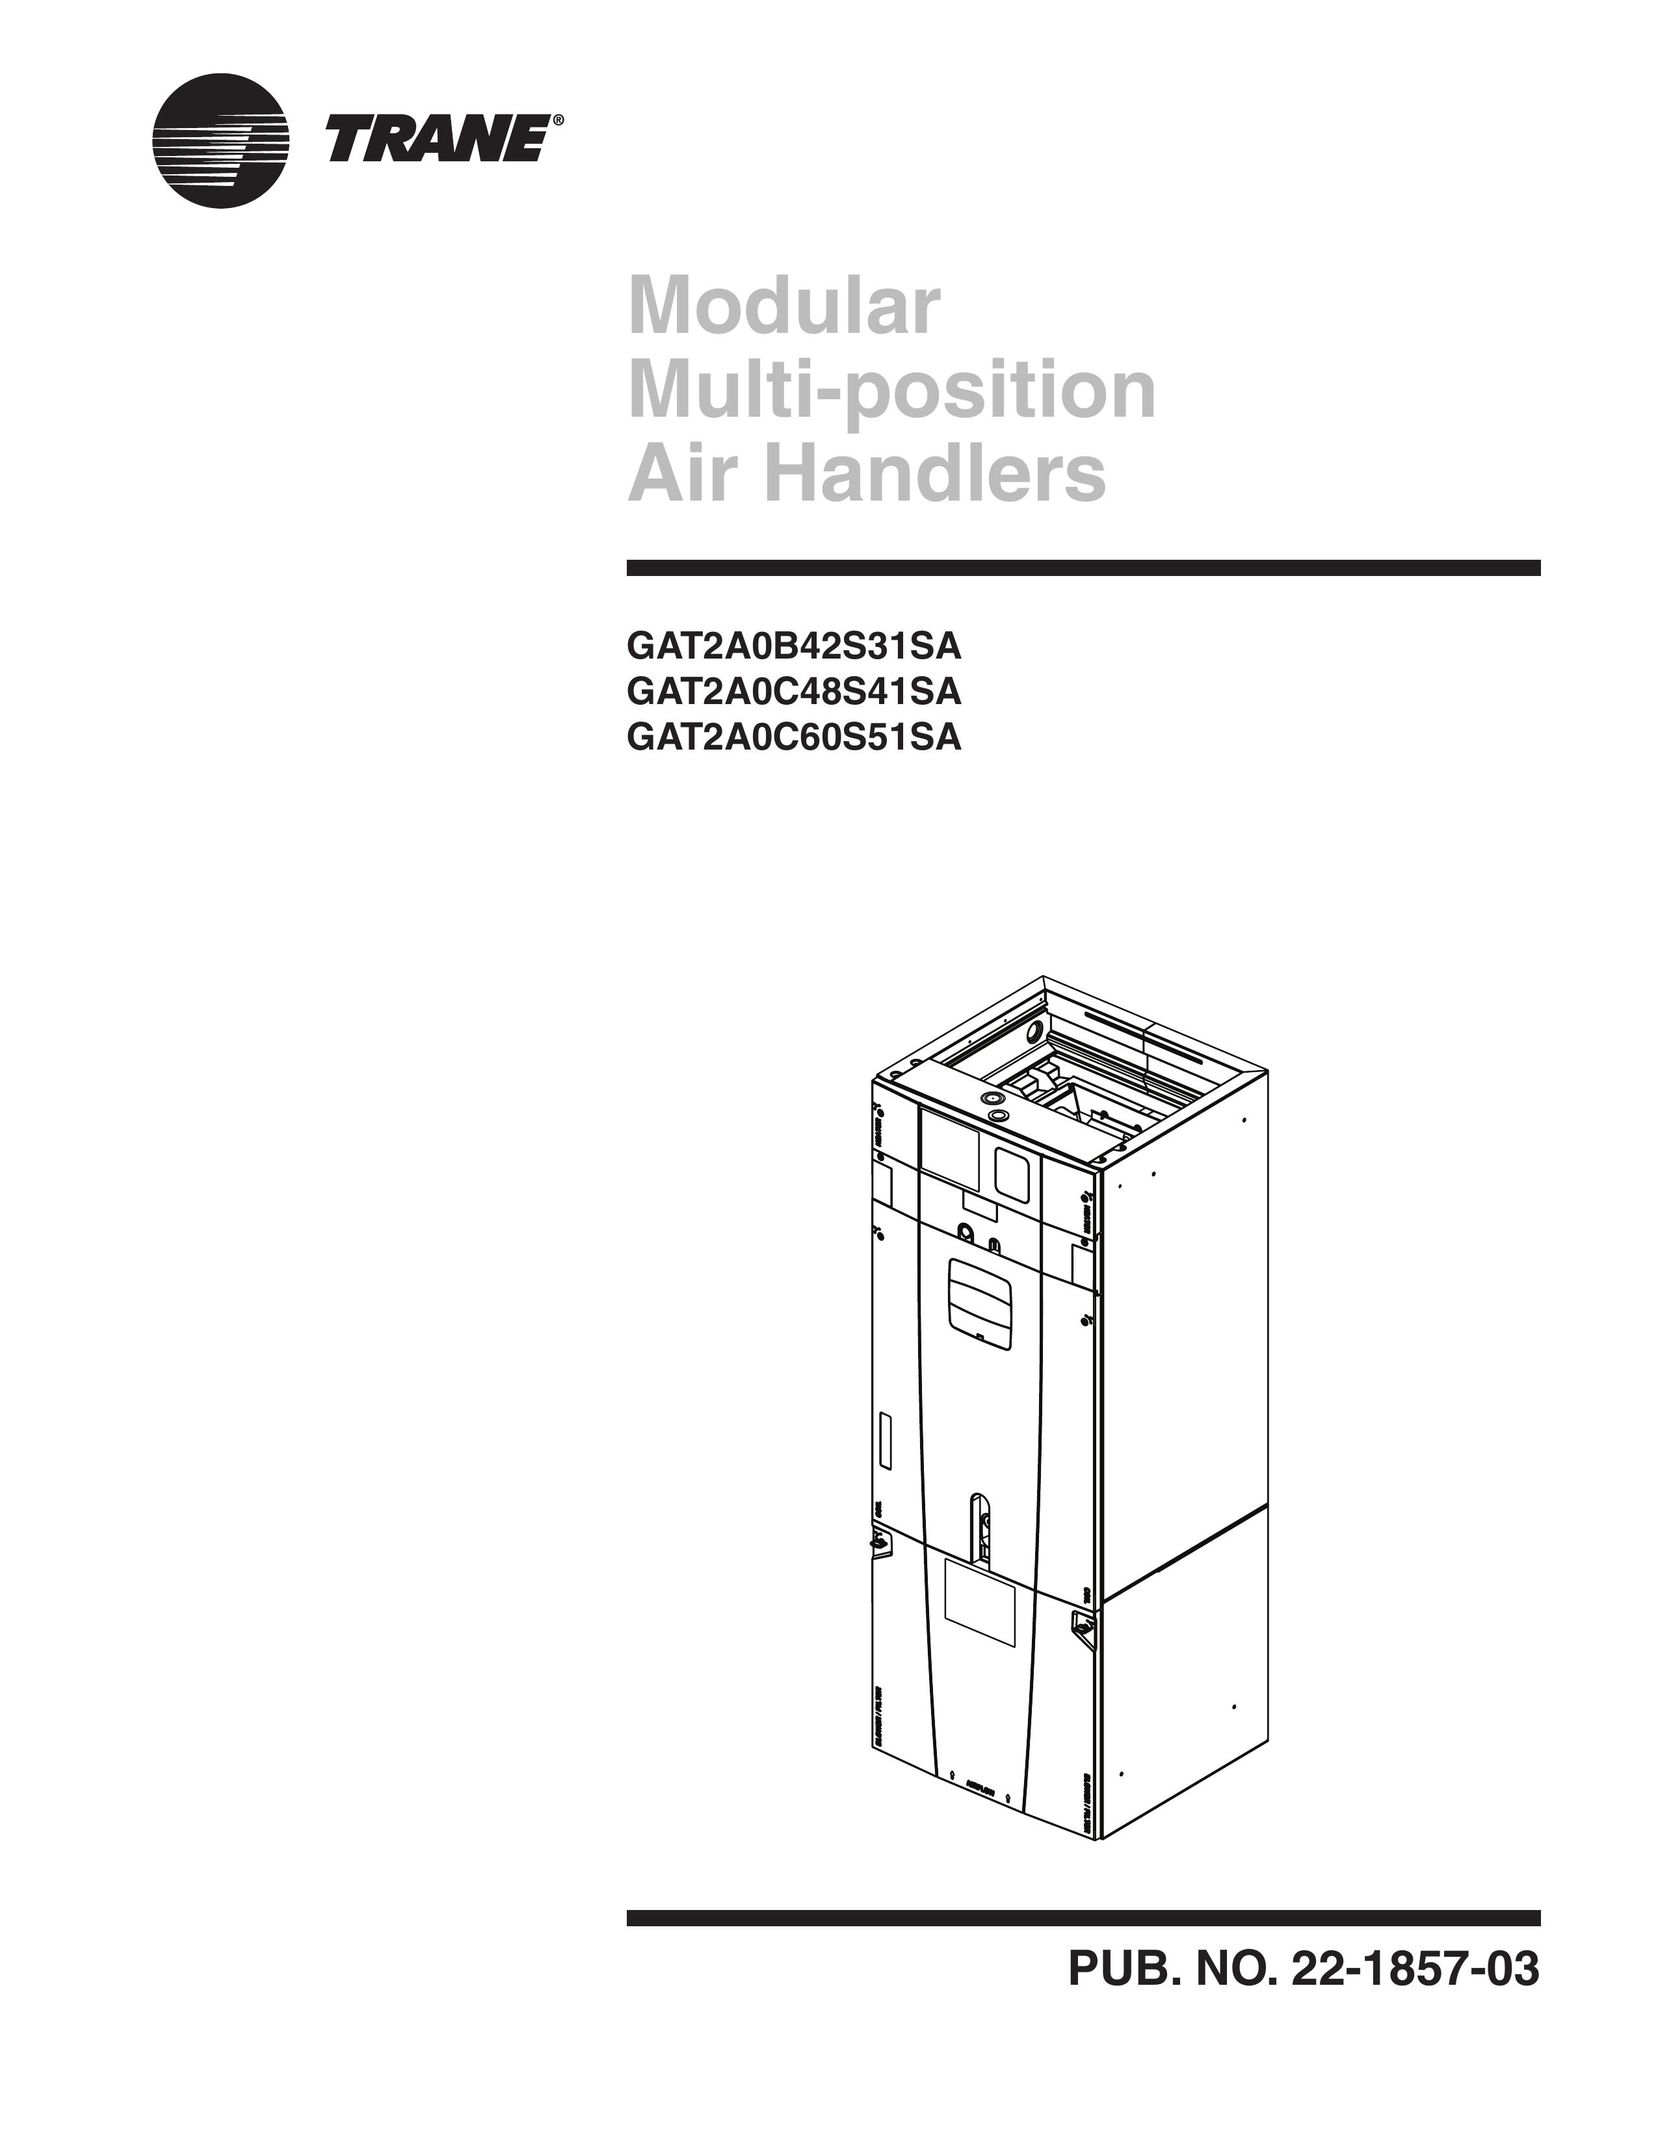 Trane GAT2A0C48S41SA Air Conditioner User Manual